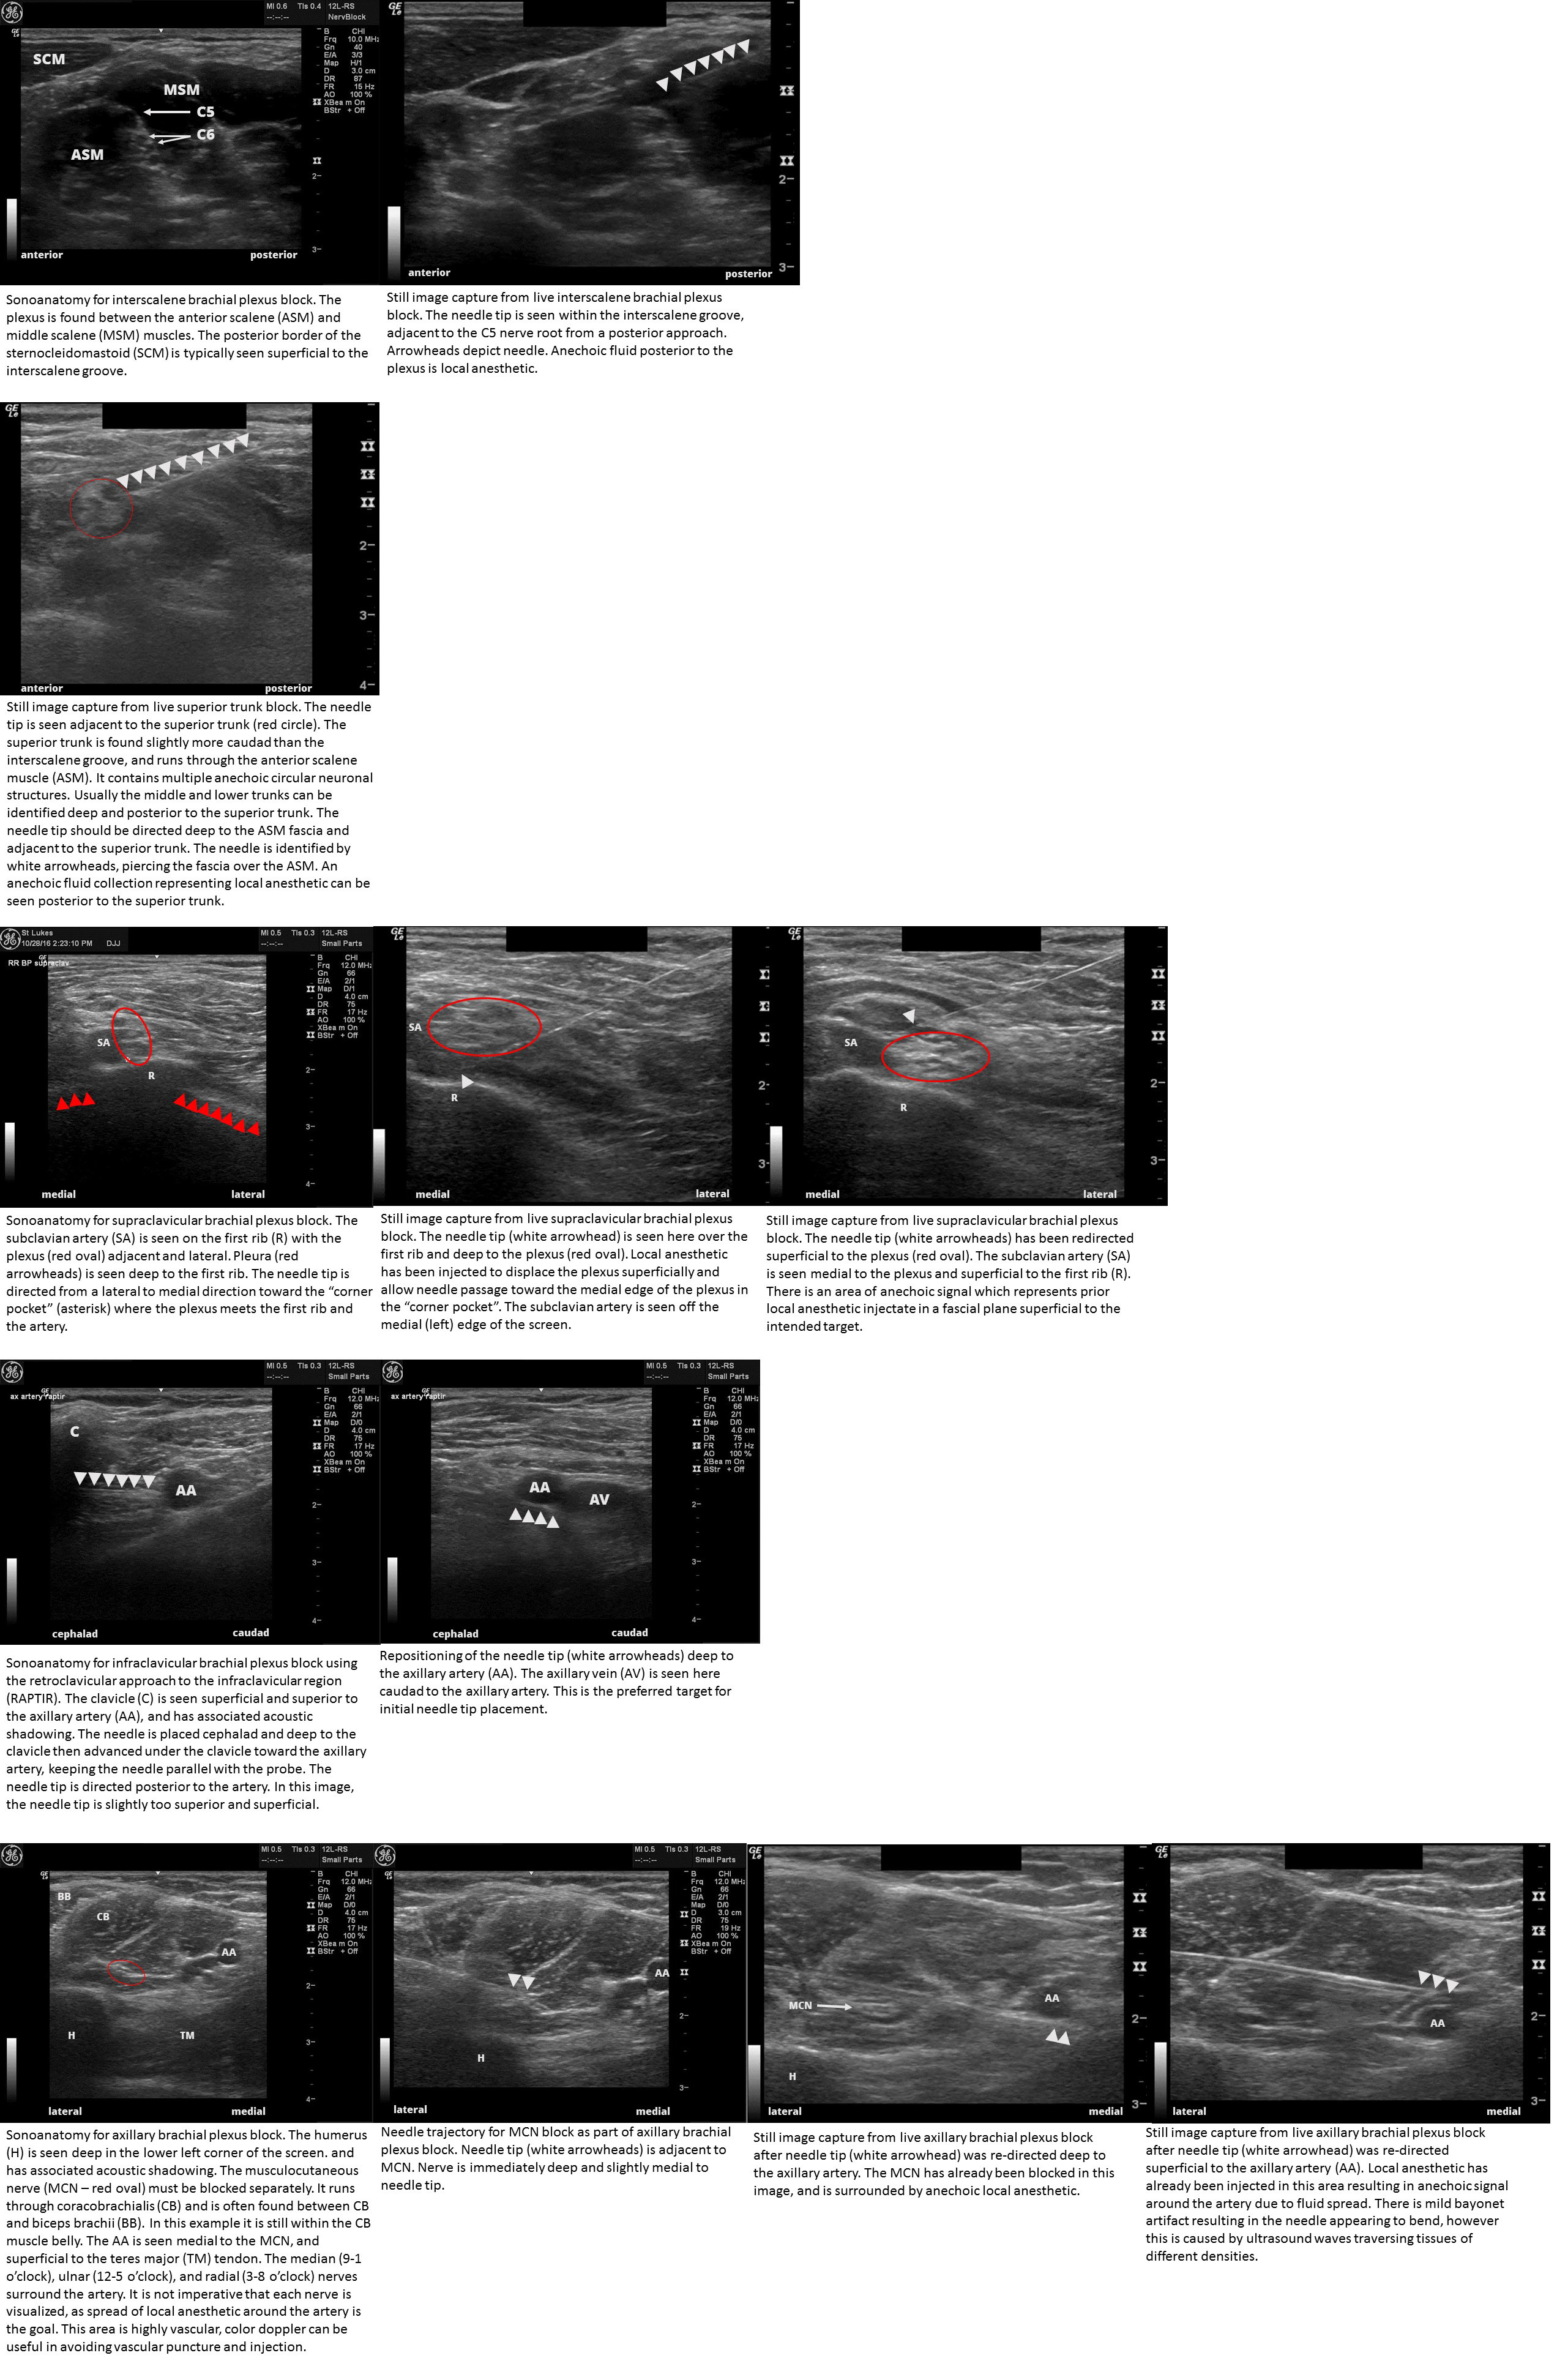 Sonoanatomy and needle placement for ultrasound guided brachial plexus blocks Includes interscalene brachial plexus block, su